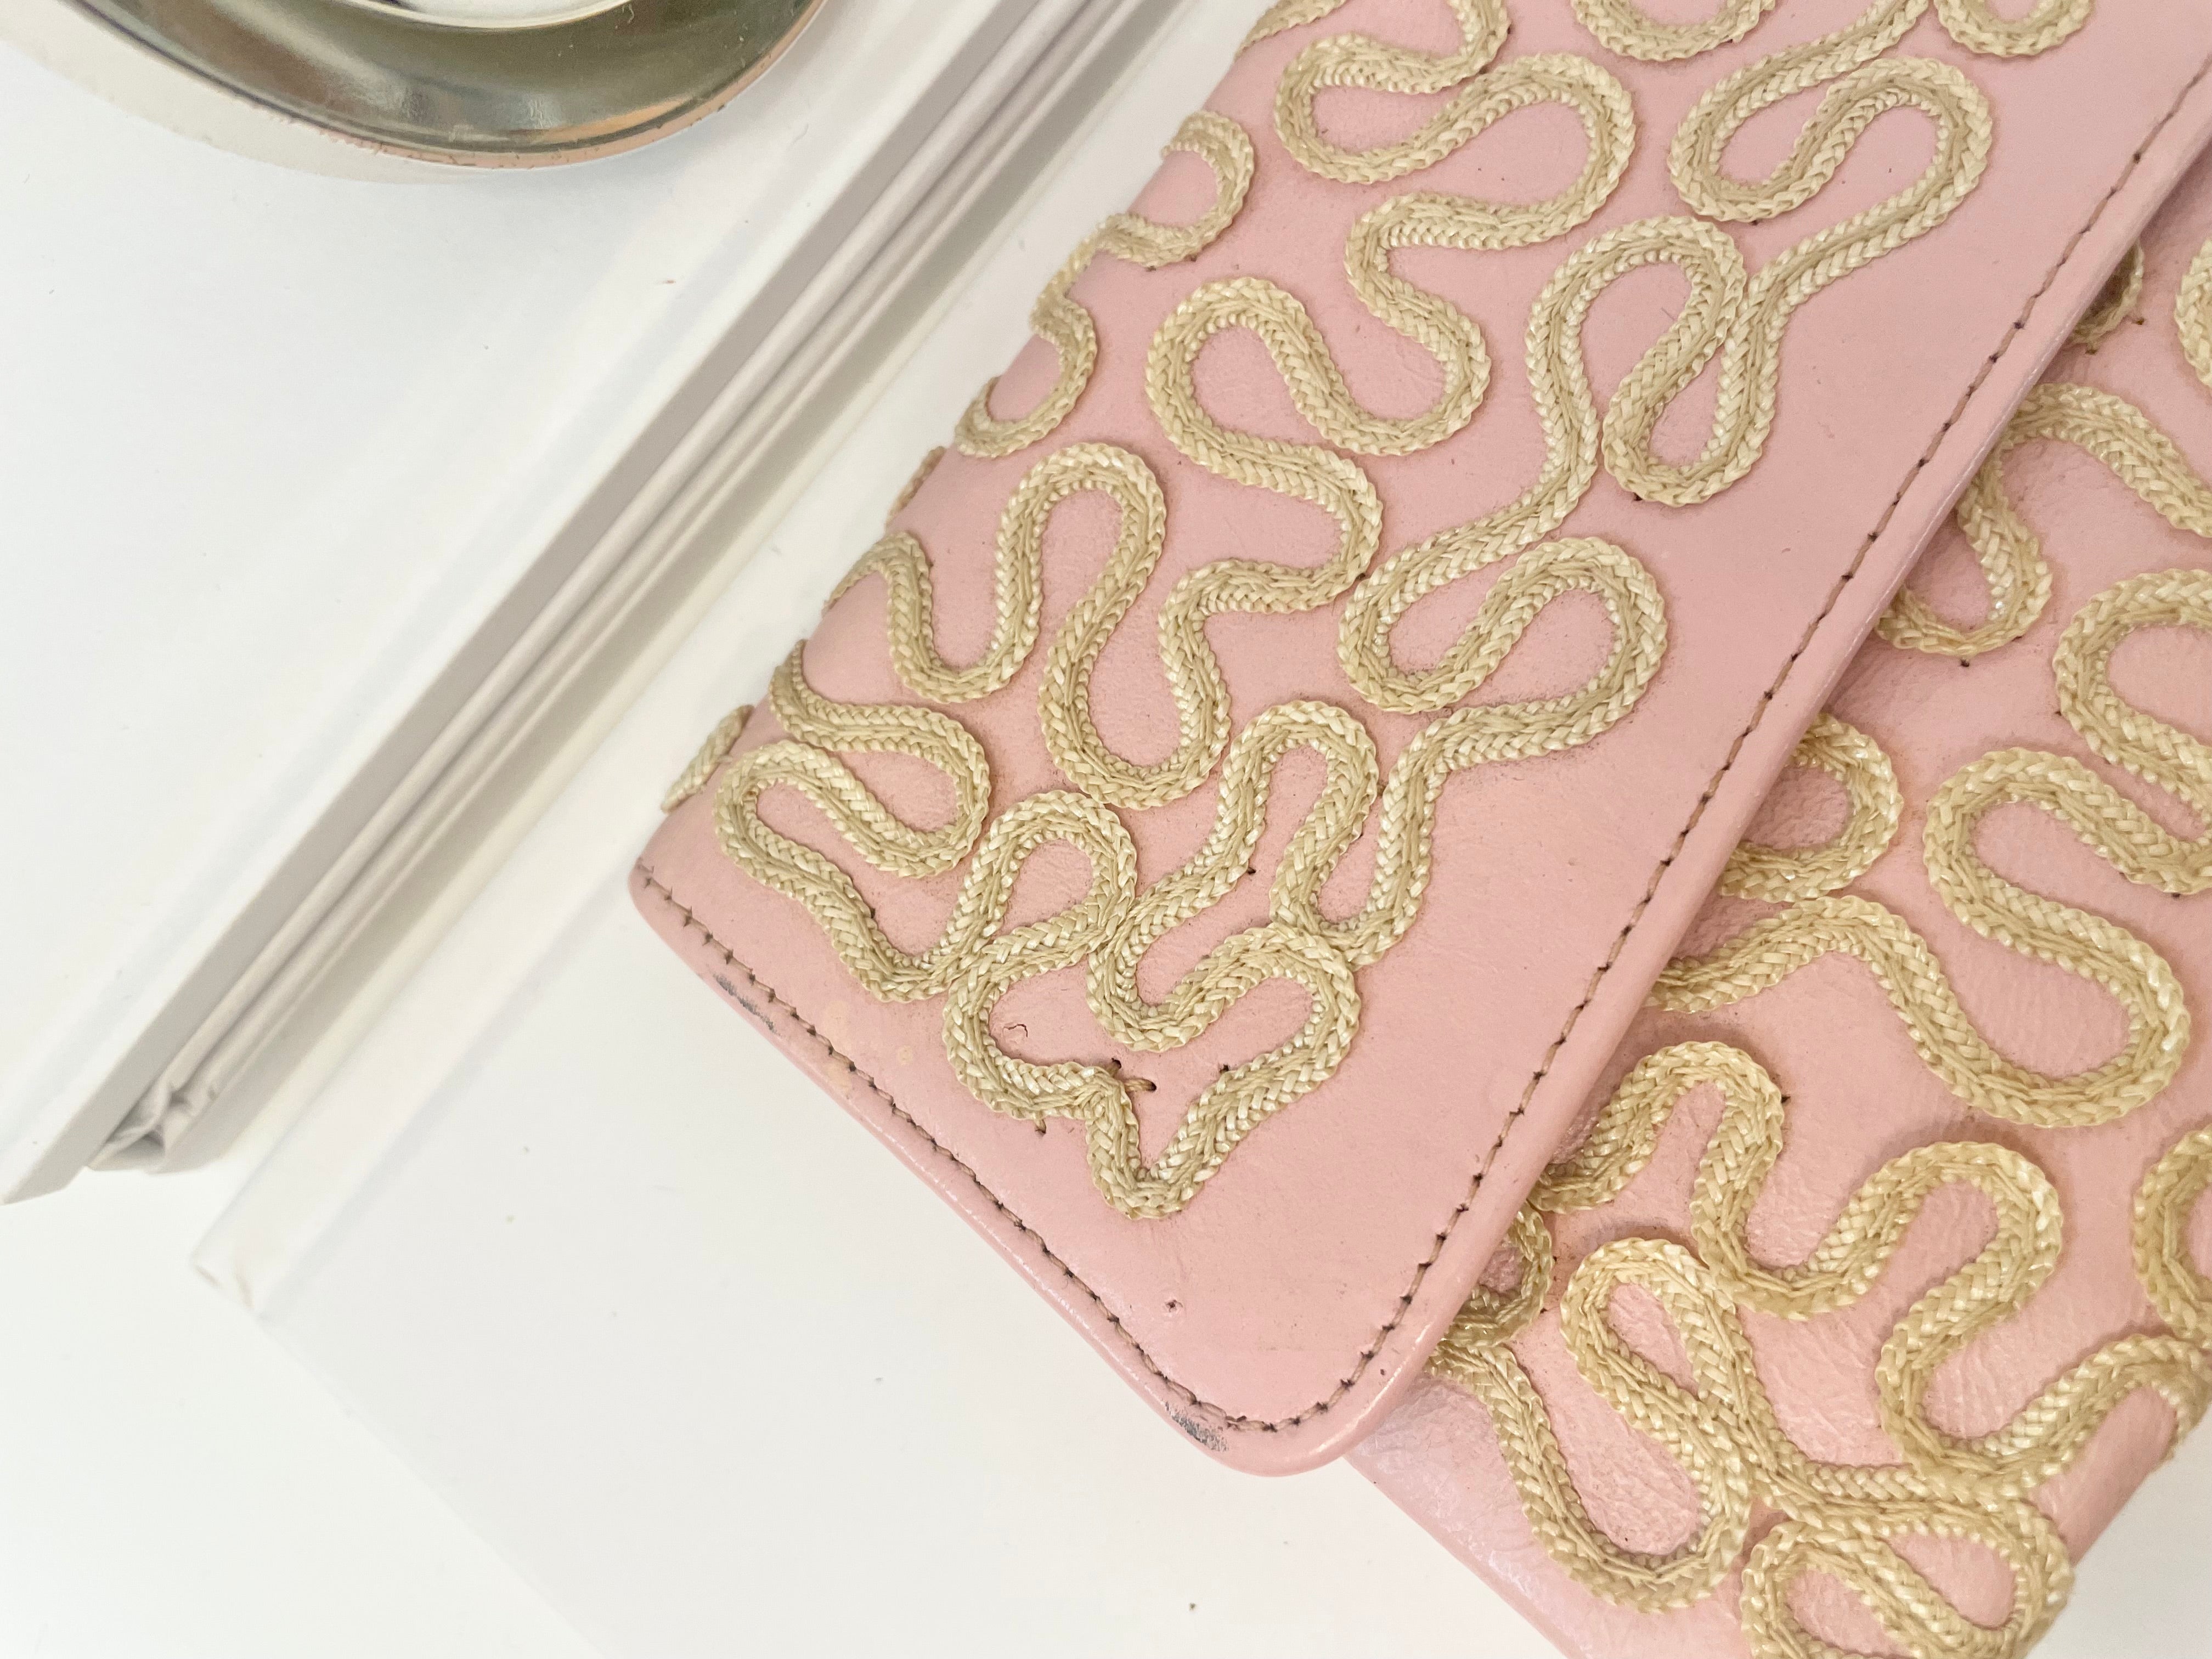 Vintage fabulous feminine soft pink clutch bag... so elegant